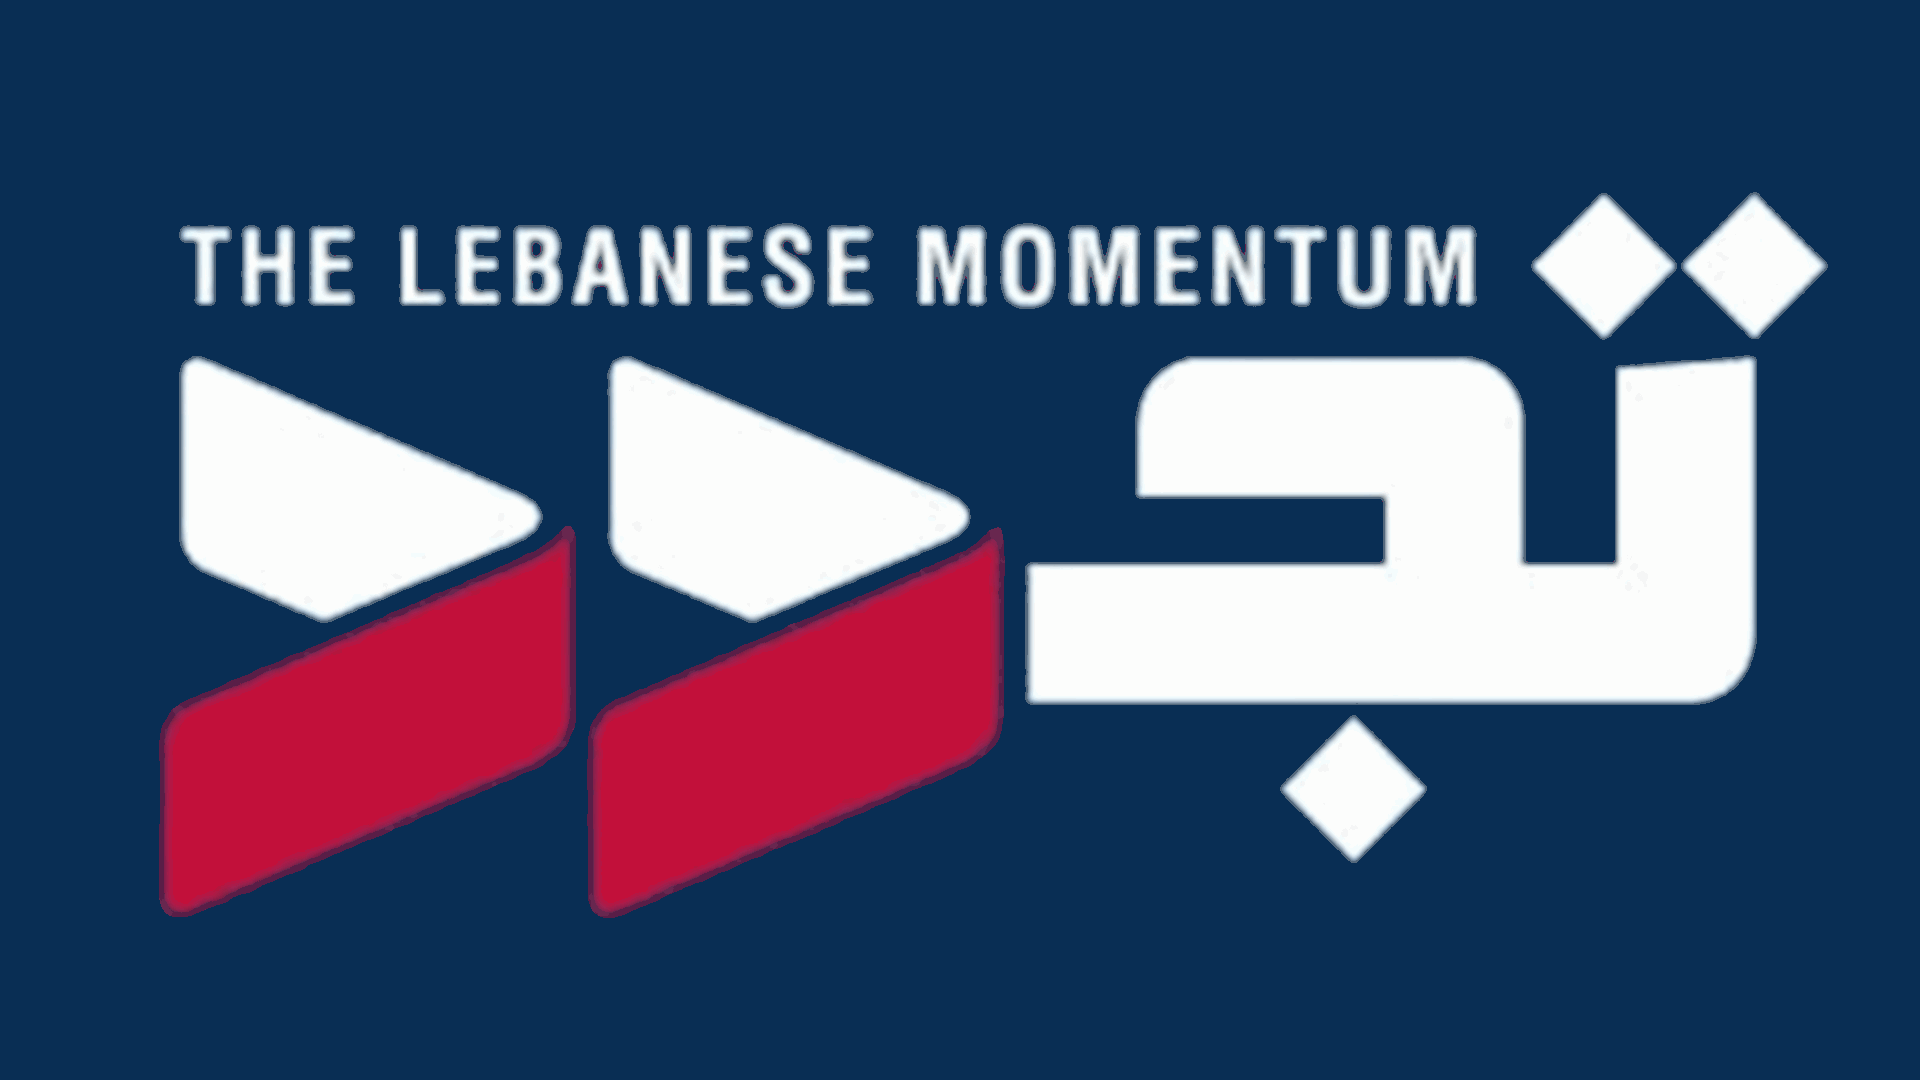 &quot;تجدد&quot;: التعرض لقبرص مدمر لمصالح اللبنانيين ولصورة الدولة